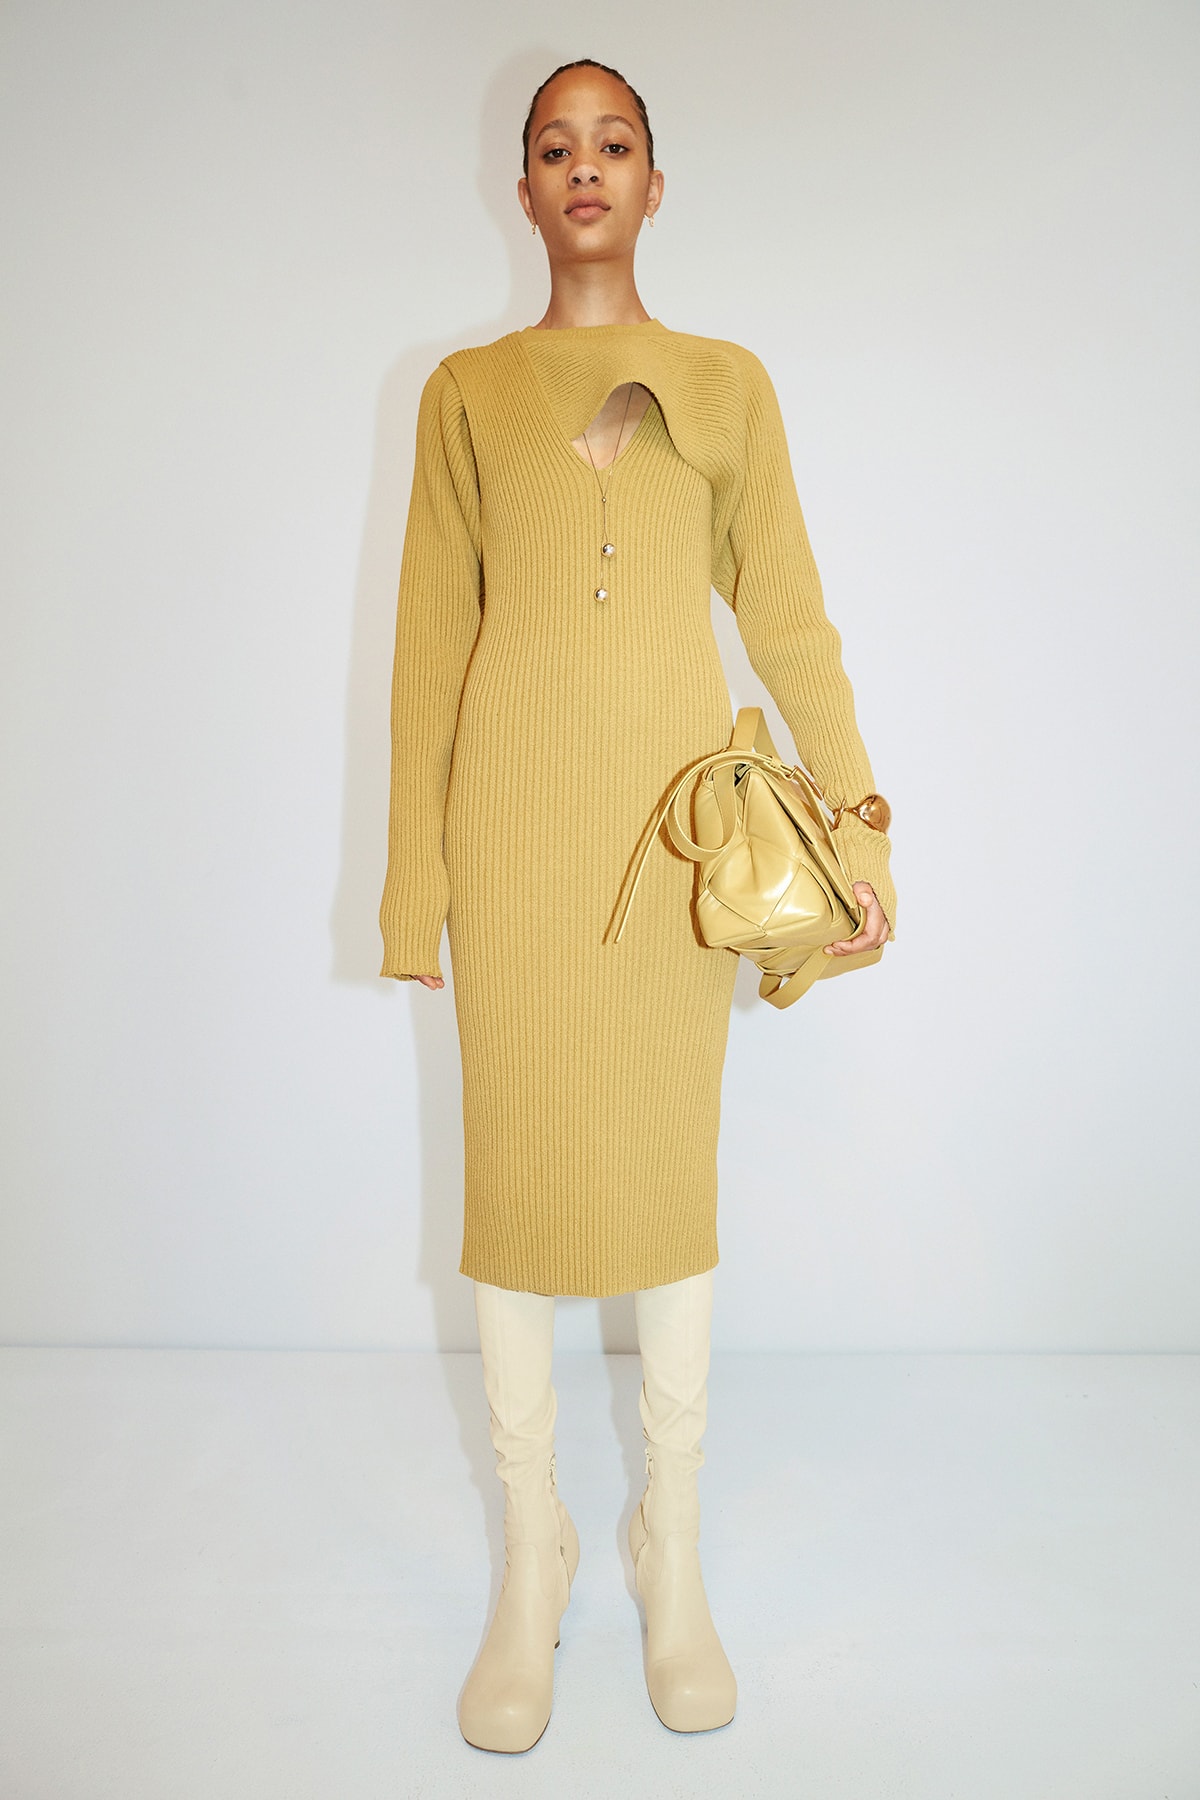 Bottega Veneta Pre-Fall 2020 Collection Lookbook Knit Dress Yellow Mustard